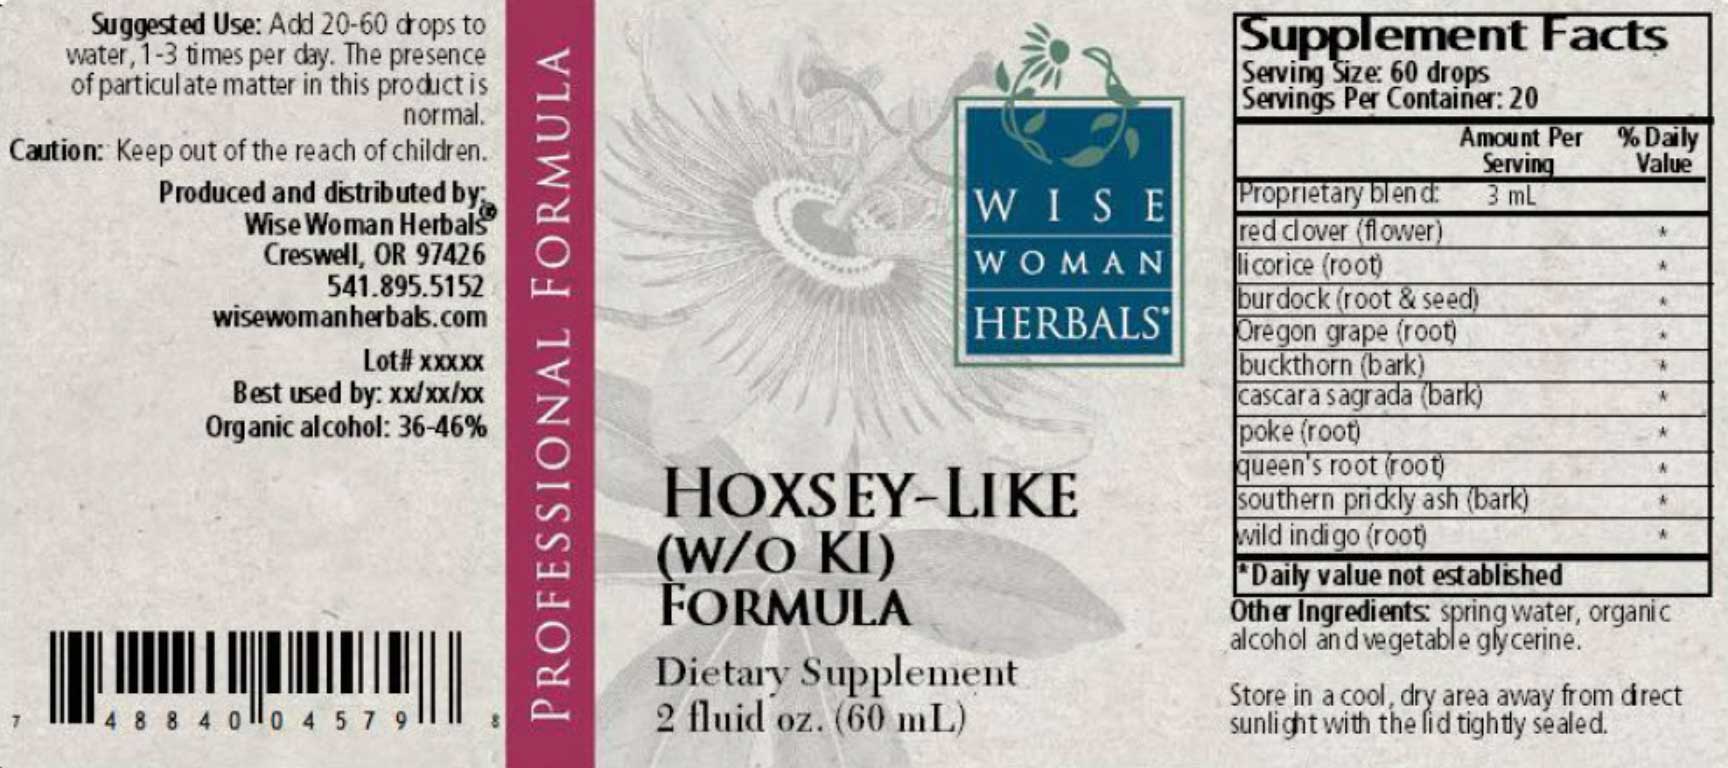 Wise Woman Herbals Hoxsey Like Formula without Potassium Iodide (w/o KI) Label